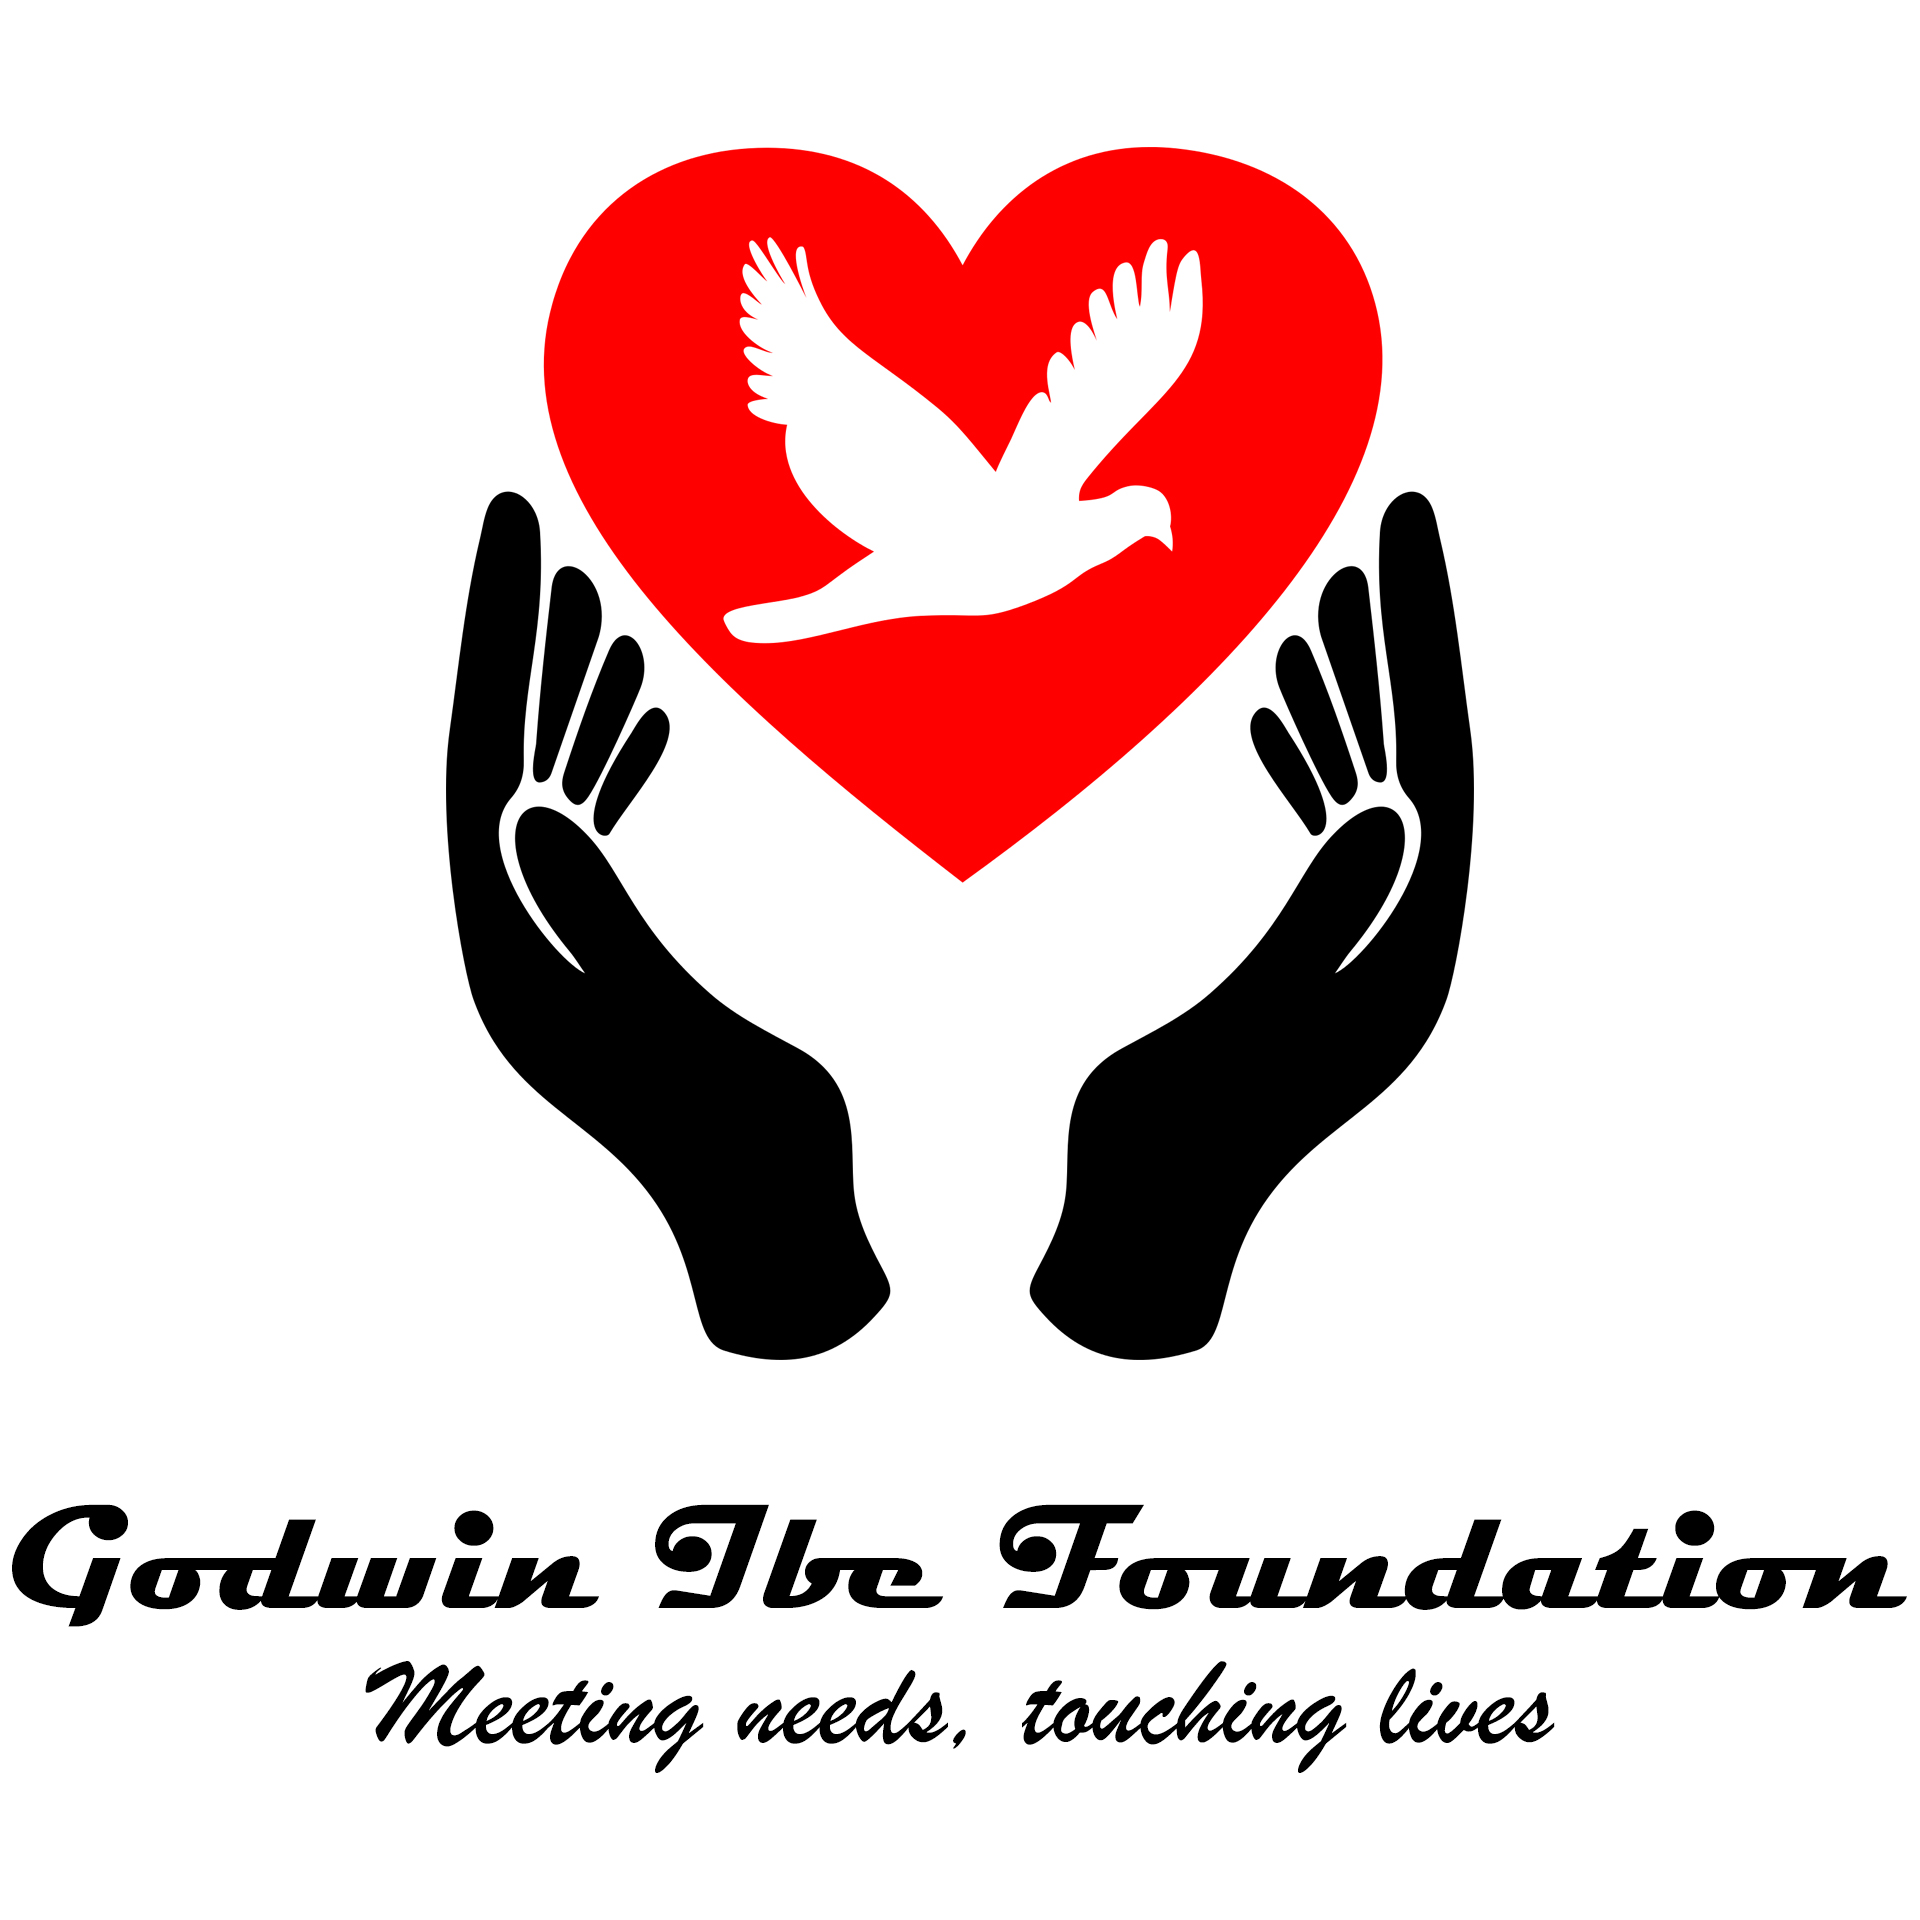 Godwin Ibe Foundation